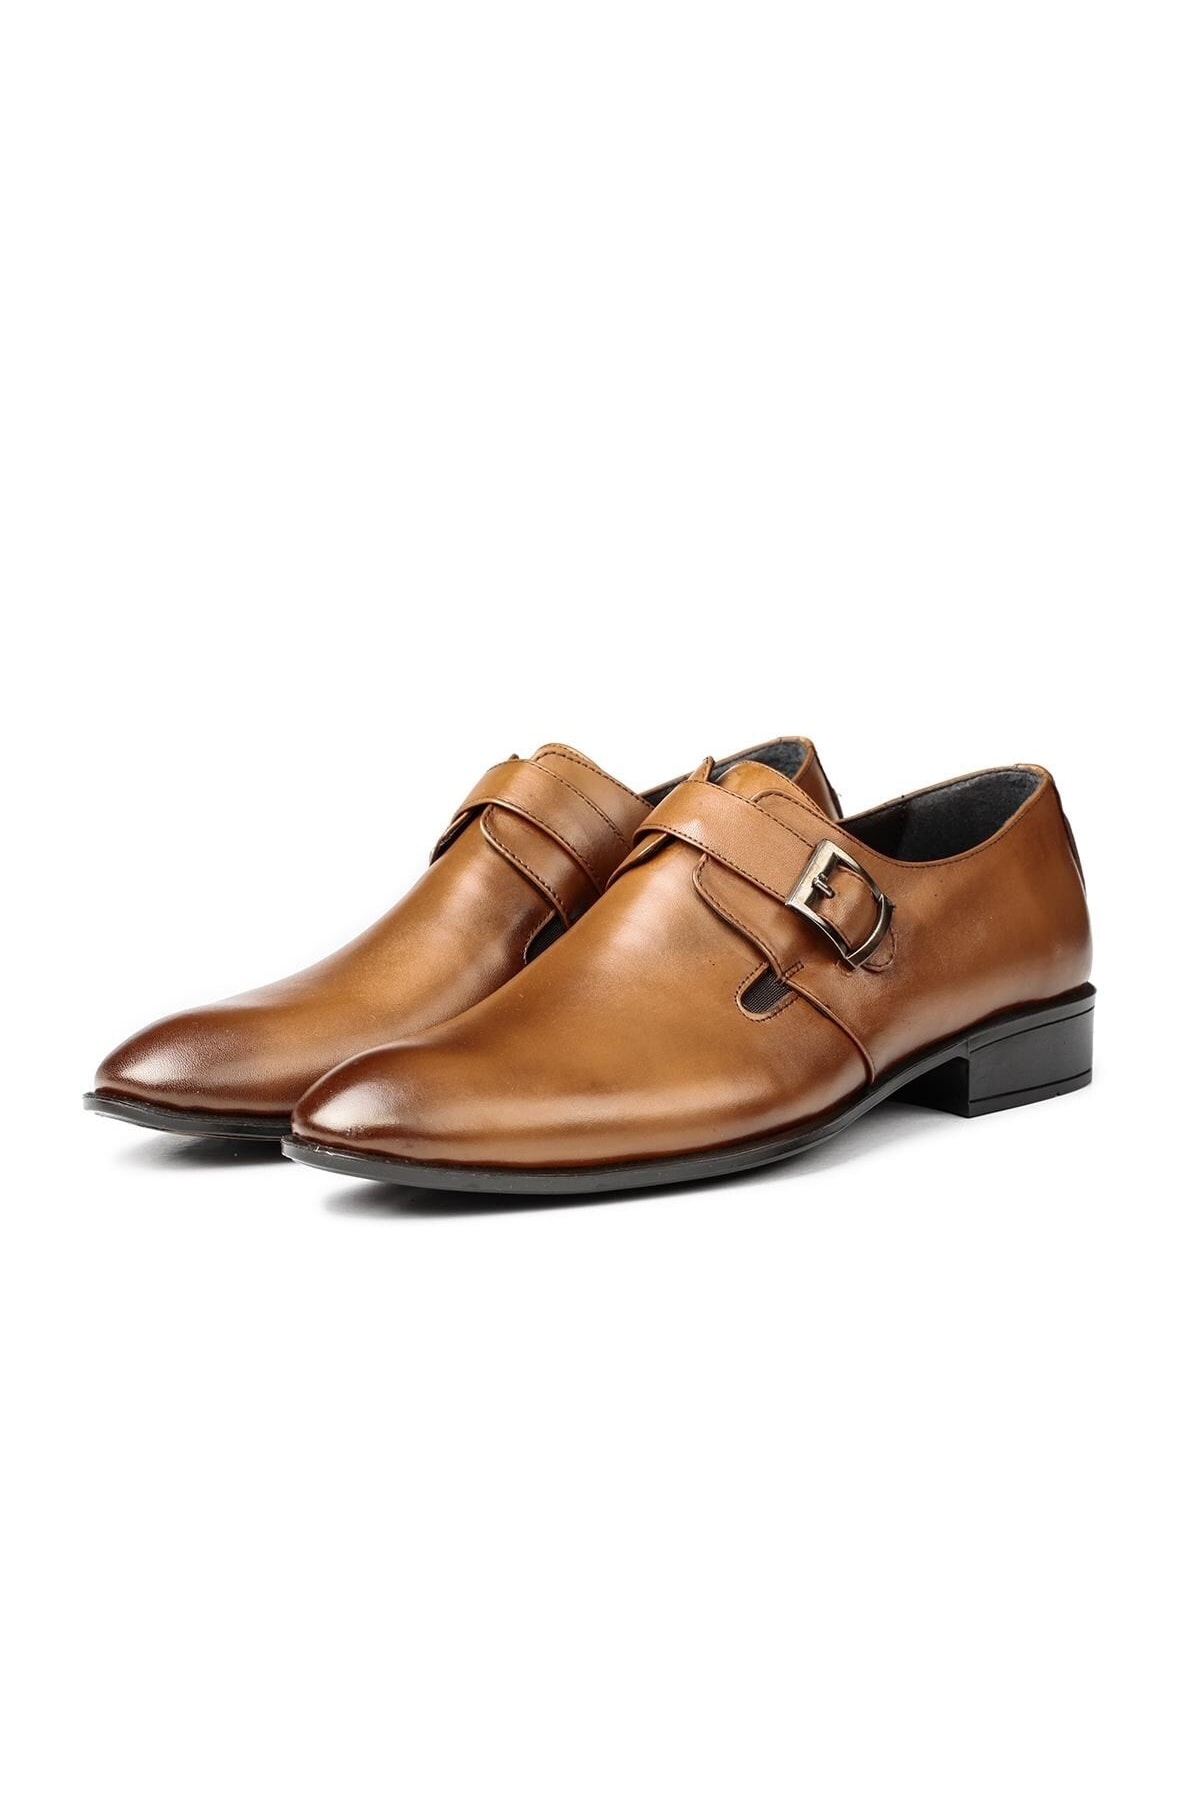 Levně Ducavelli Sharp Genuine Leather Men's Loafer Classic Moccasin Shoes